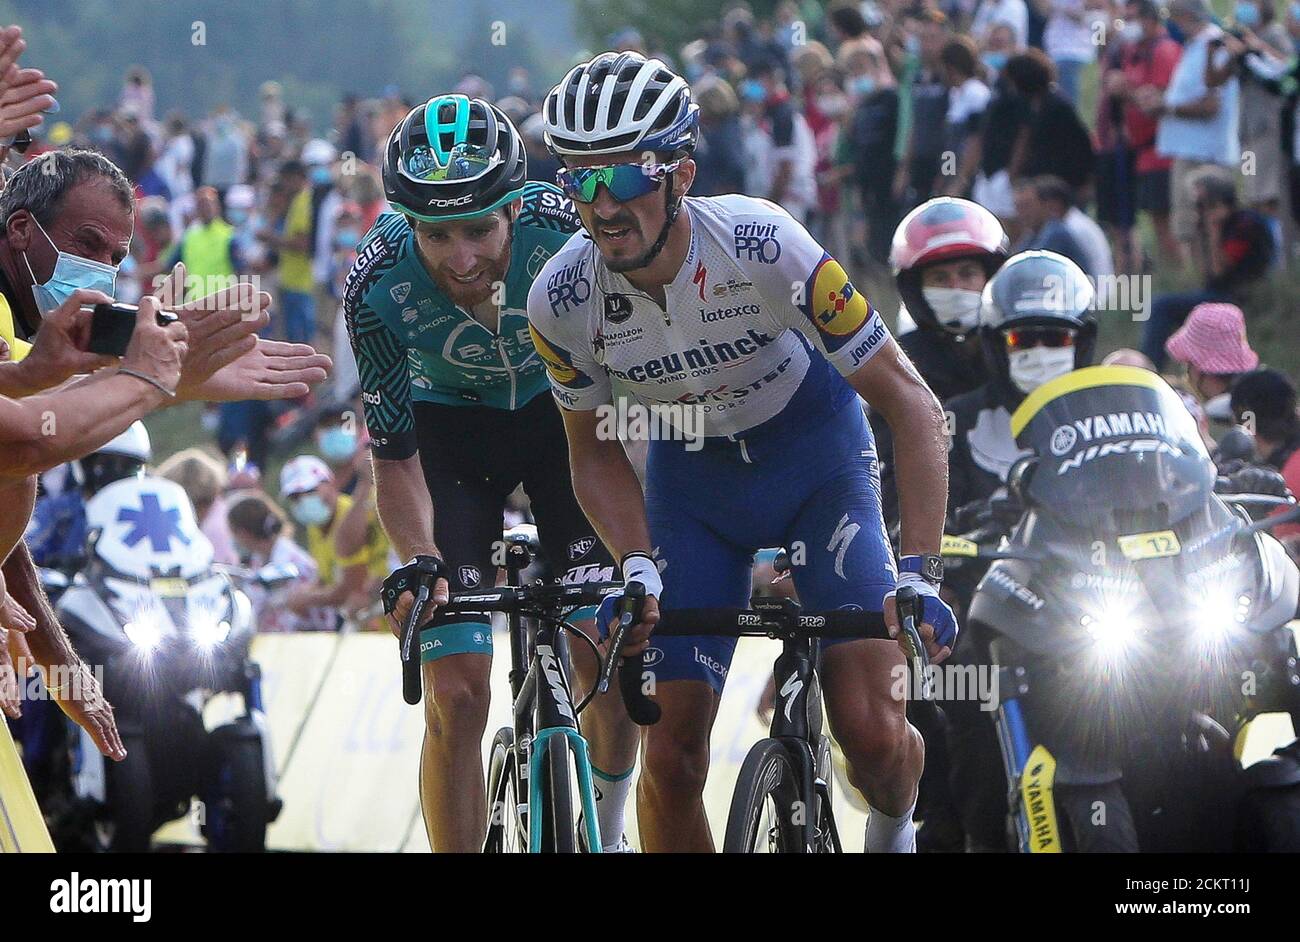 Julián Alafilippe de Deceuninck - Quick Step y Quentin Pacher de BB Hoteles - concepto Vitals durante el Tour de Francia 2020, etapa de carrera en bicicleta 16, Foto de stock